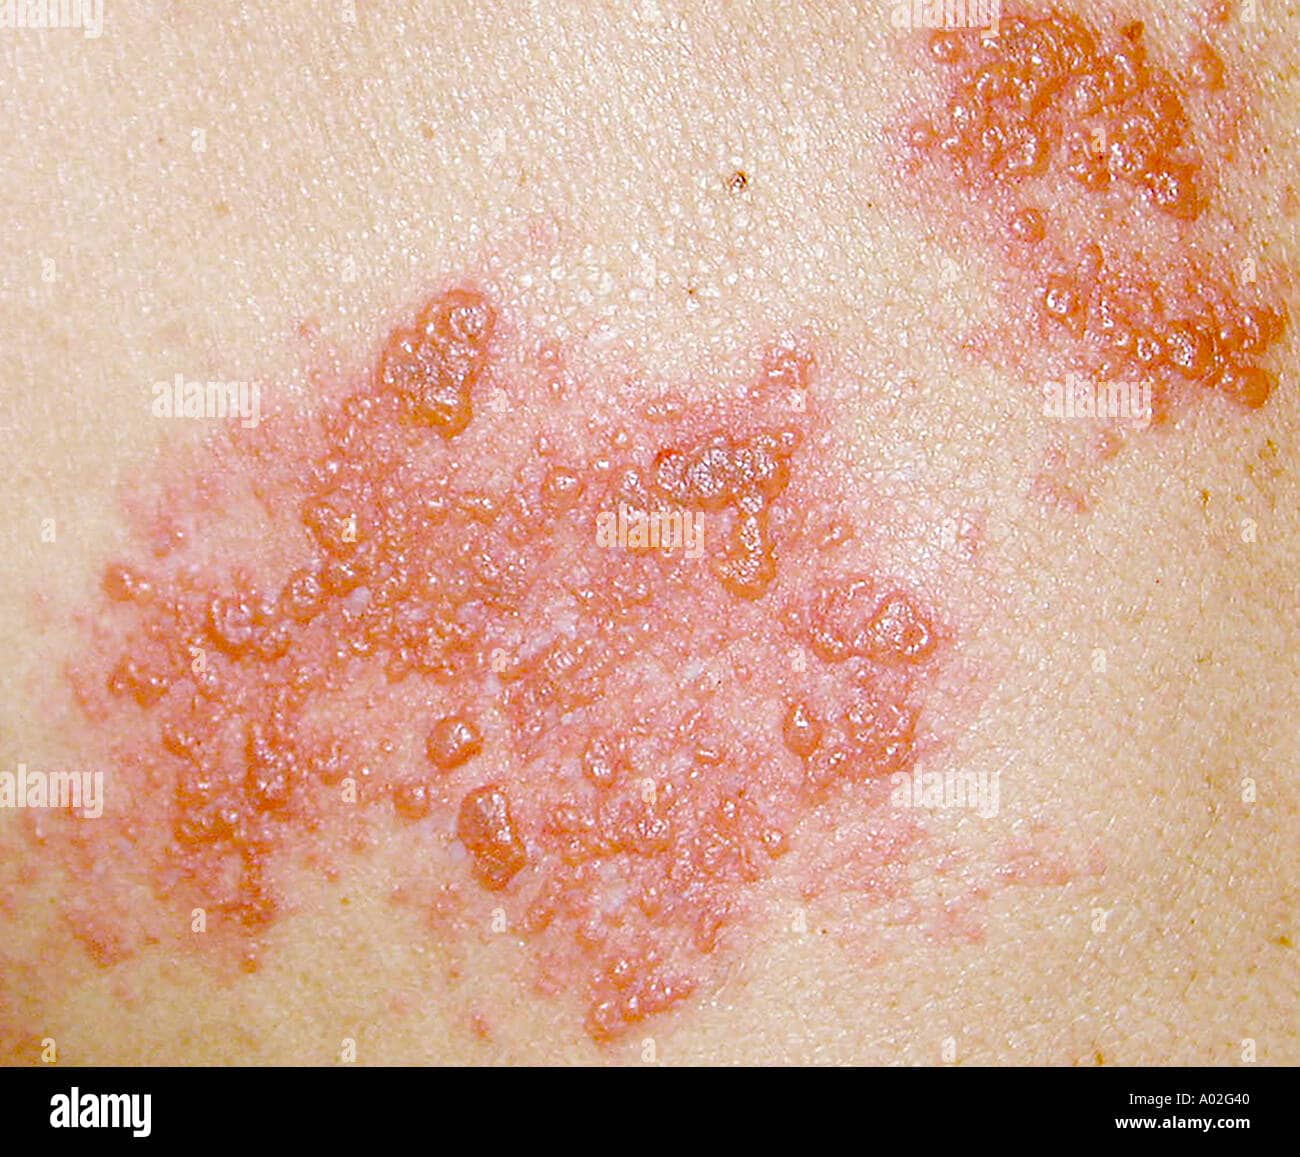 herpes zoster shingles rash Stock Photo: 3217471